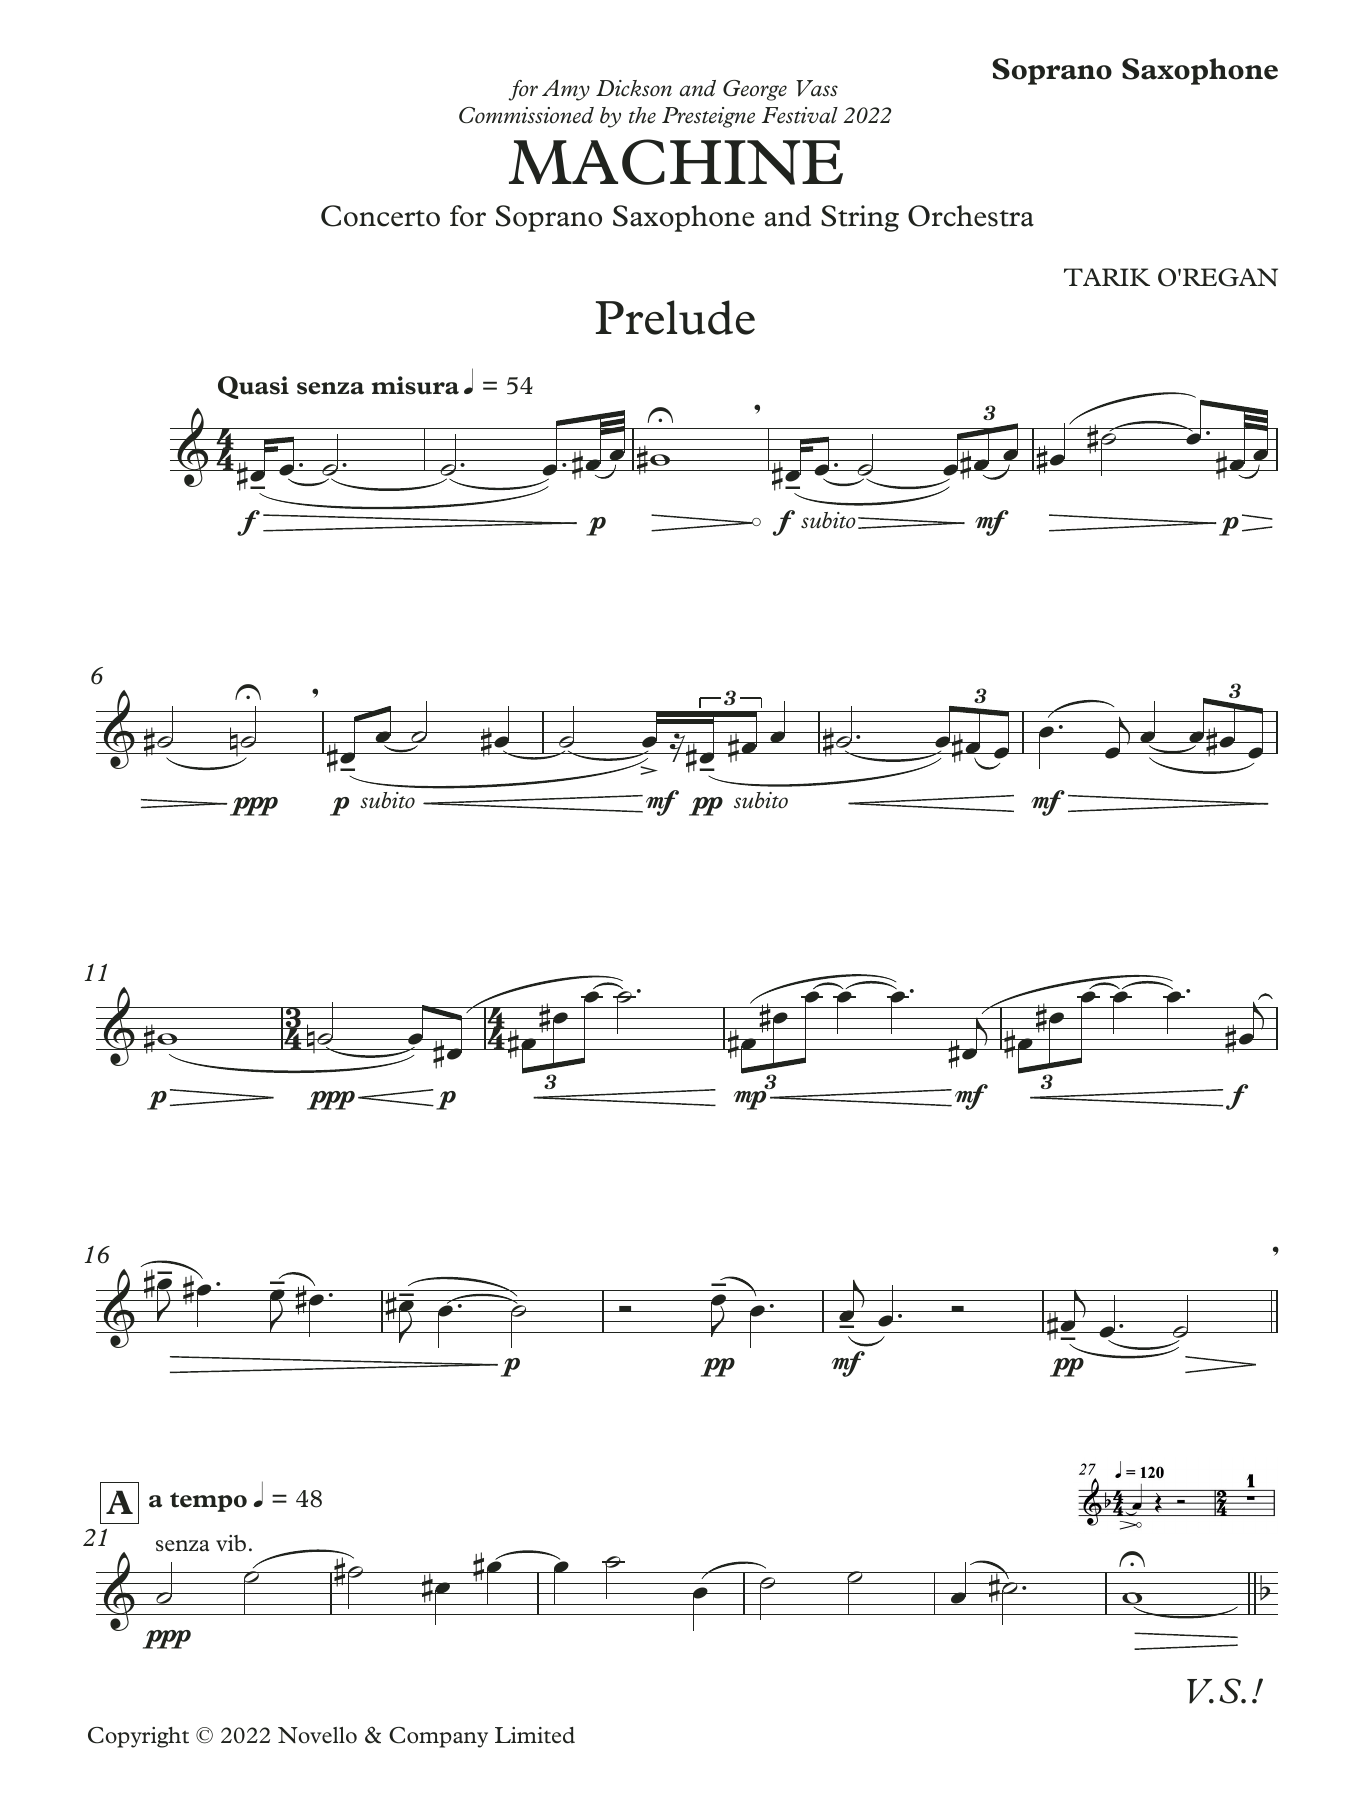 Tarik O'Regan Machine (Solo Part) Sheet Music Notes & Chords for Soprano Sax Solo - Download or Print PDF